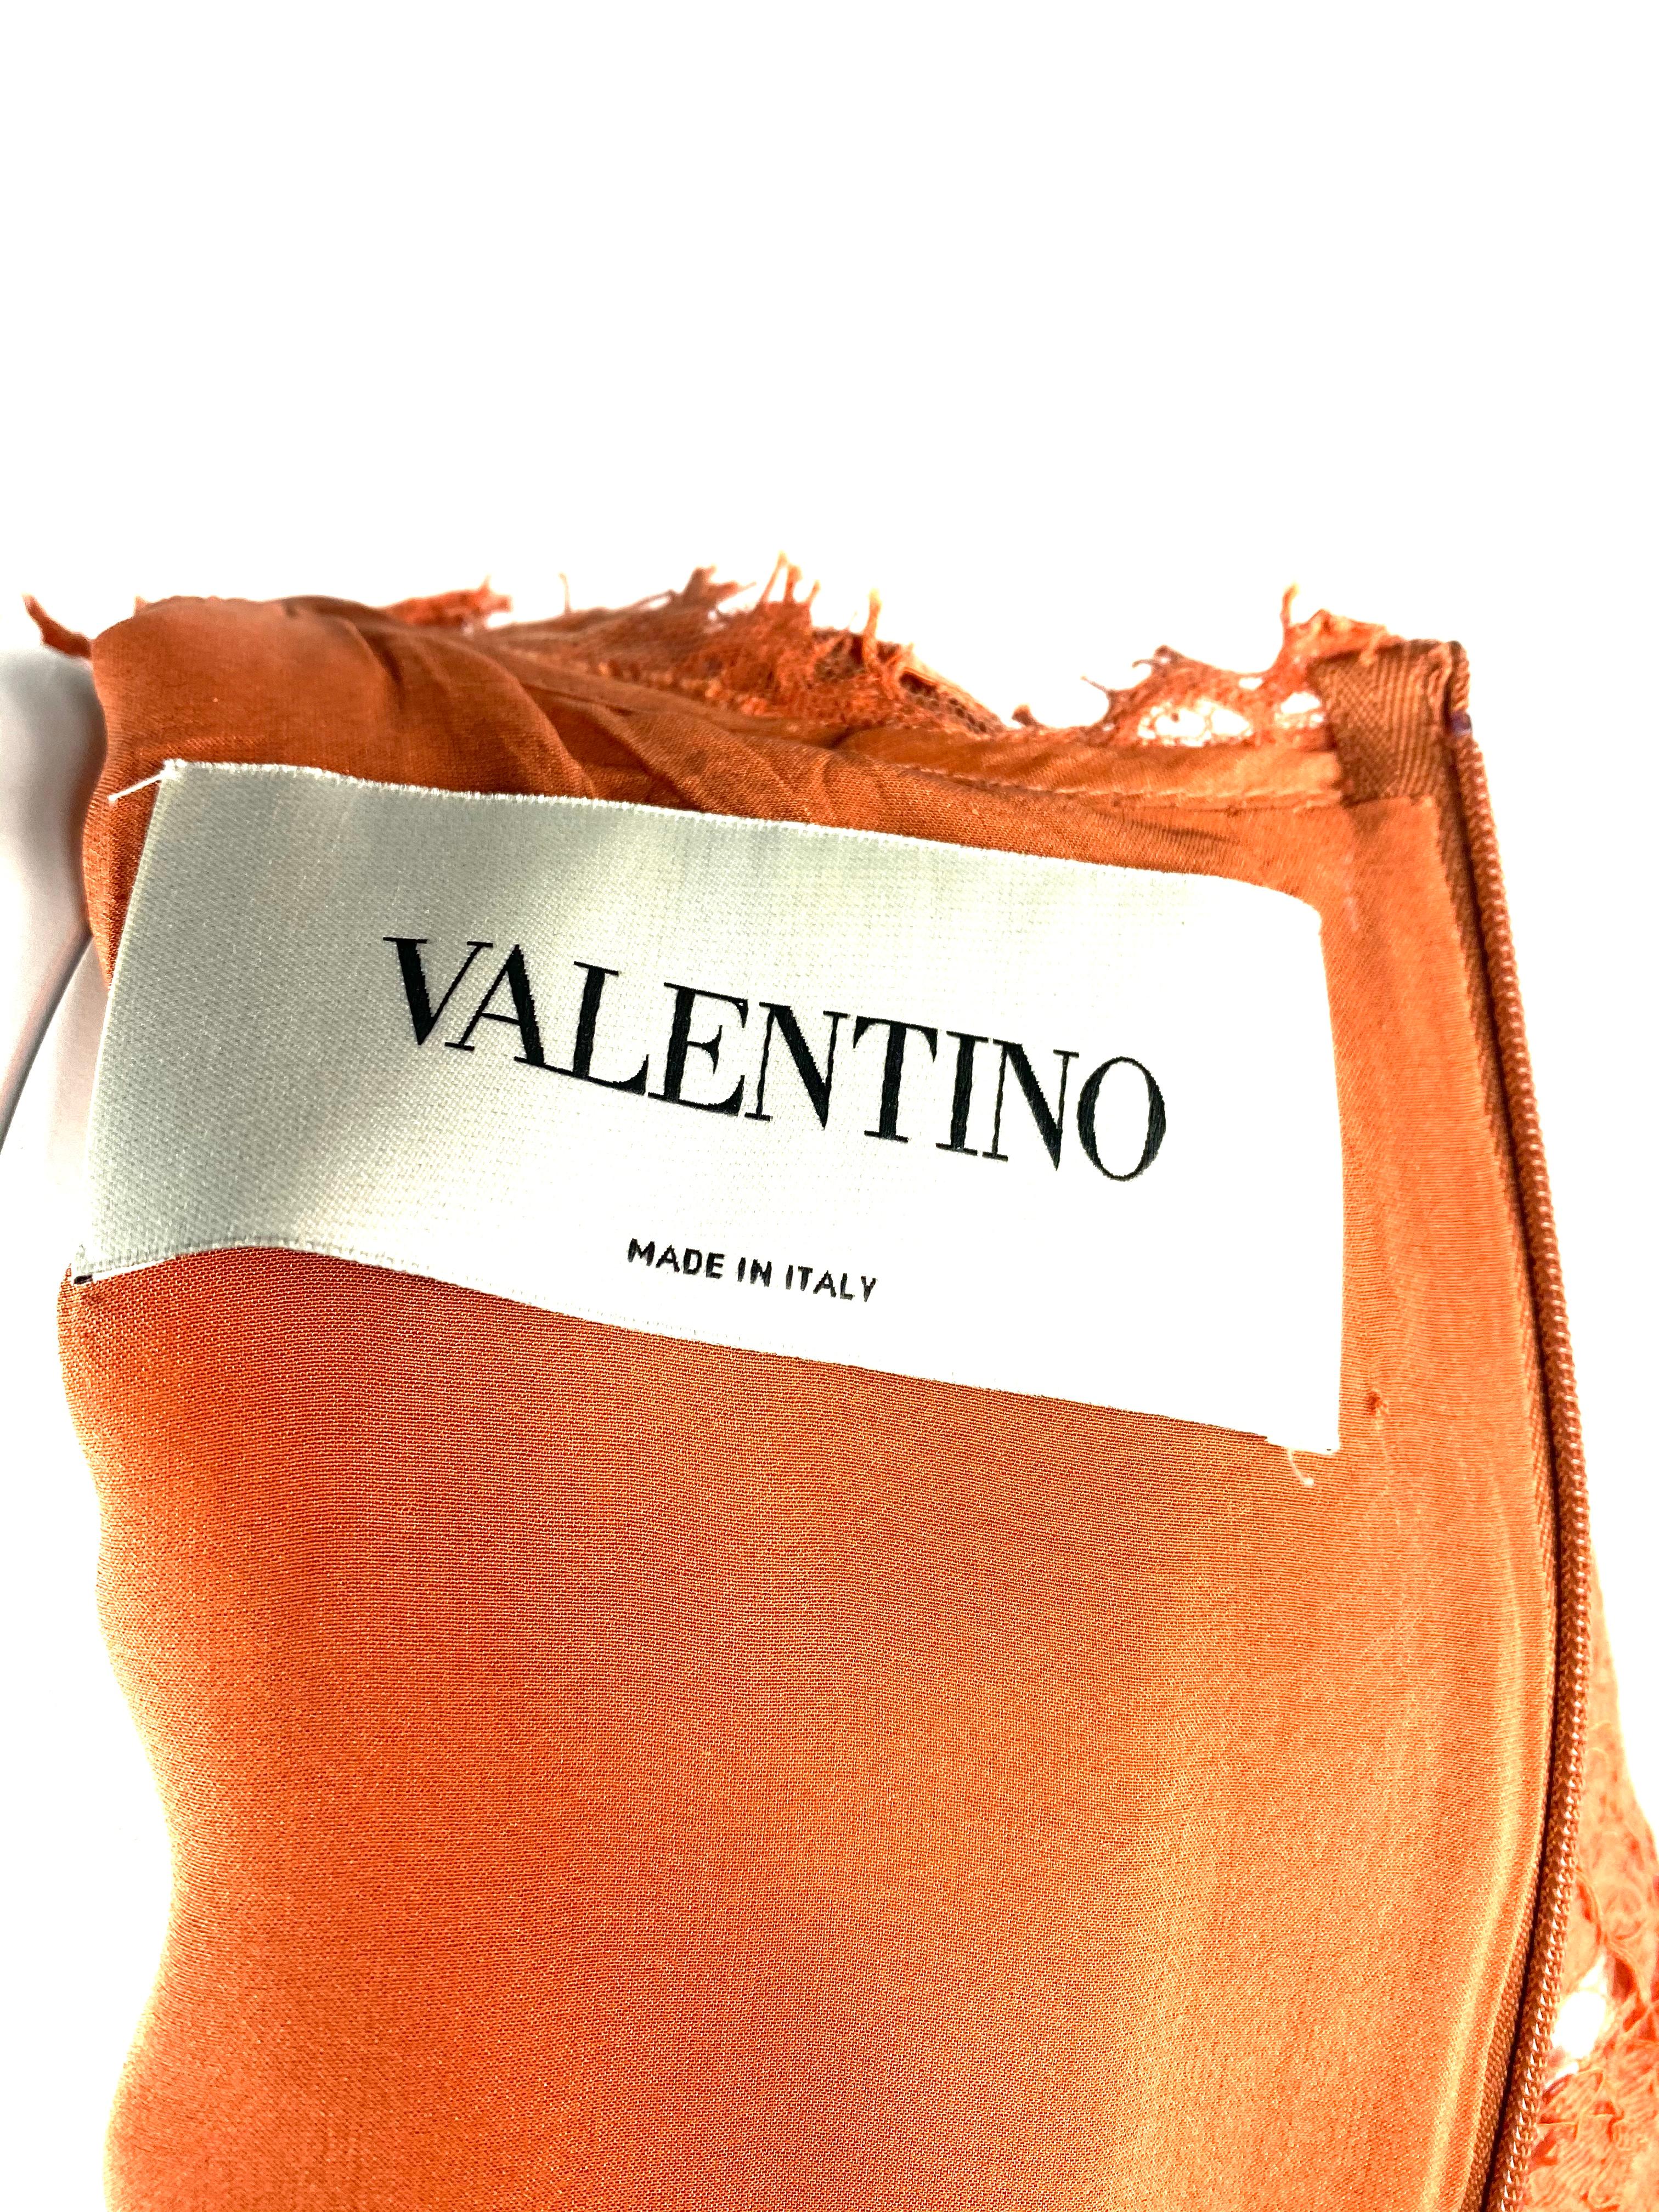 VALENTINO Spa Orange Floral Lace Long Sleeves Mini Dress Size 6 1